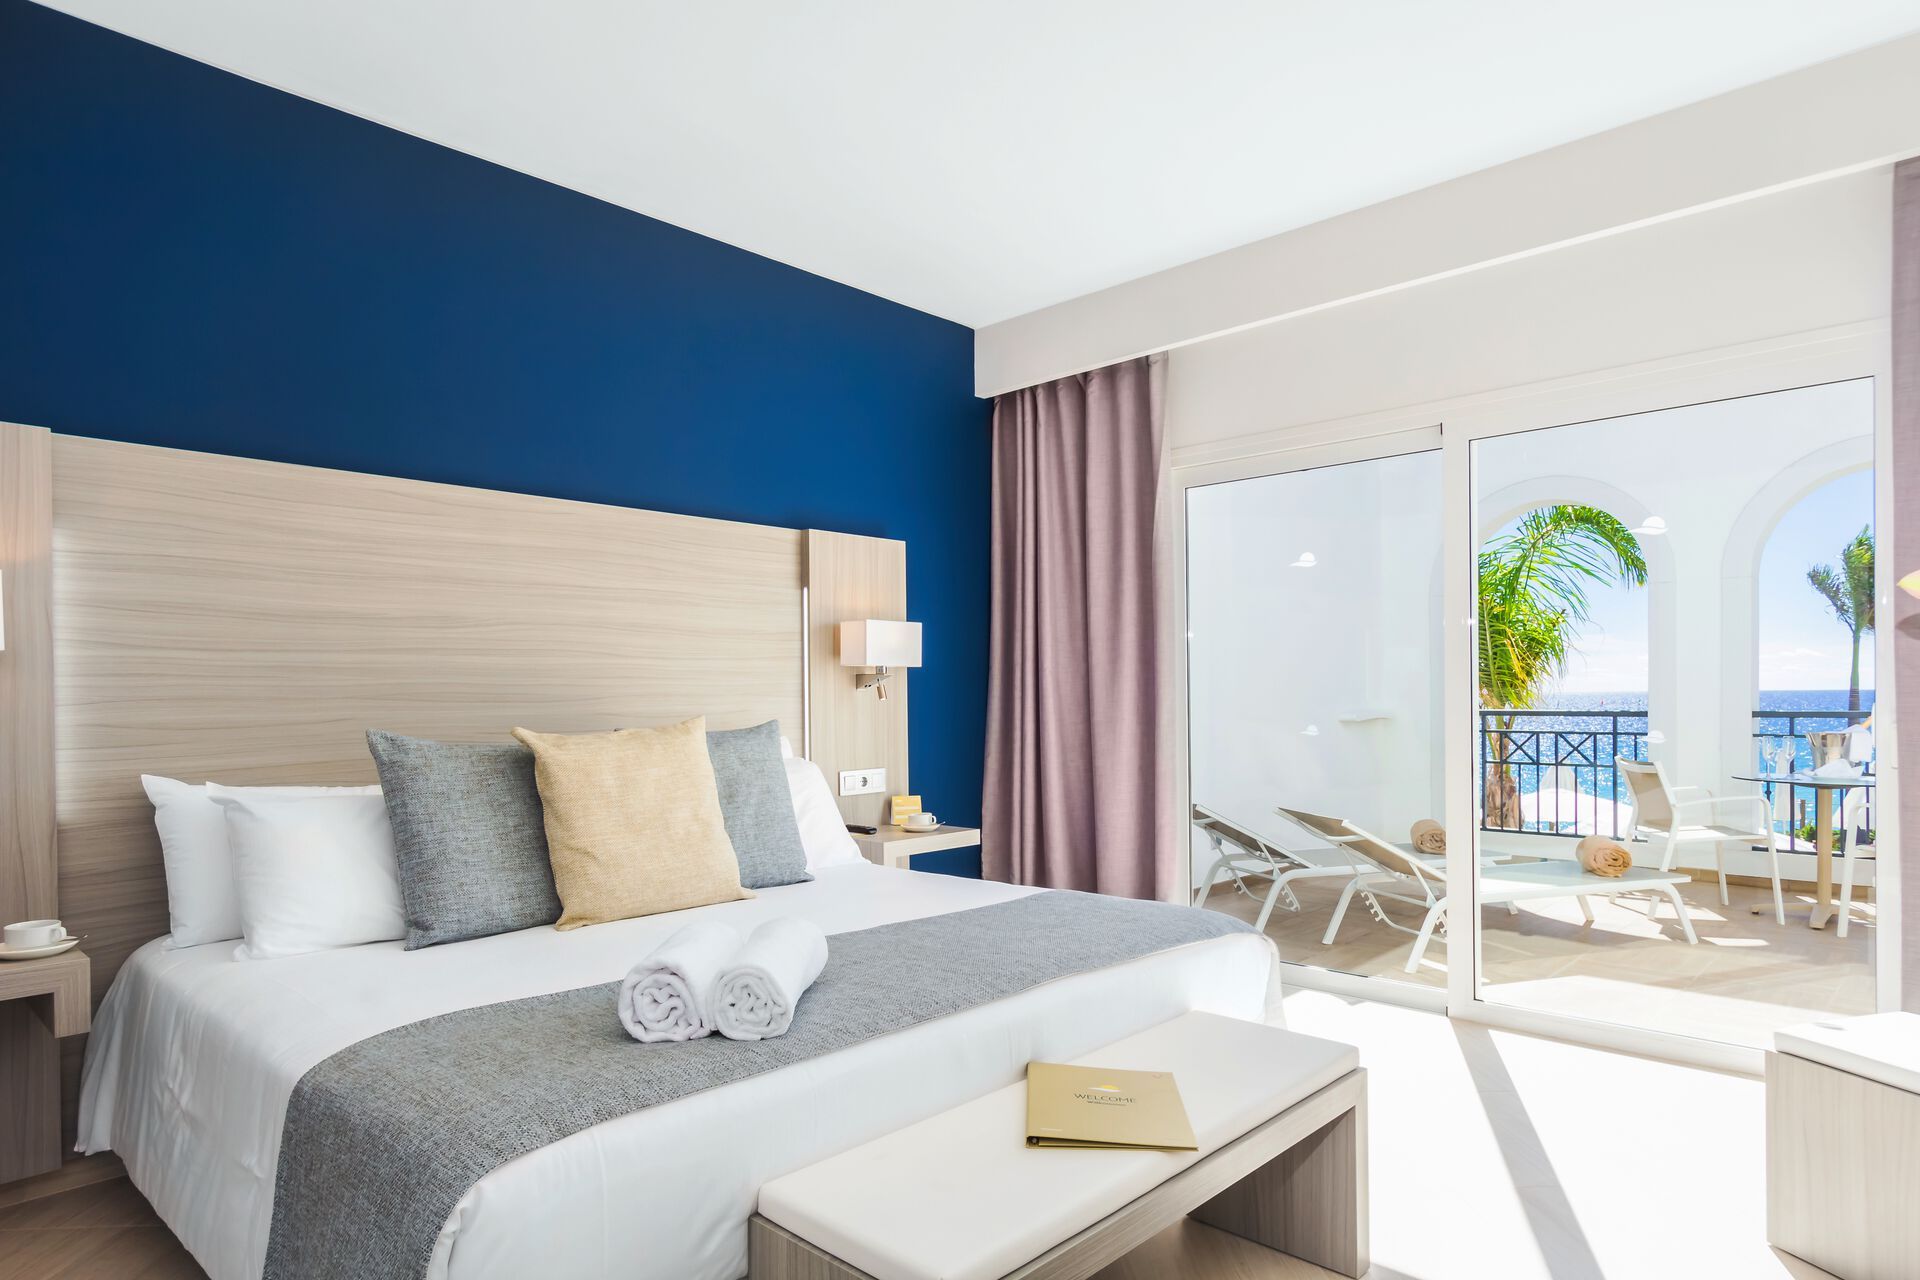 Canaries - Fuerteventura - Espagne - Hôtel Royal Palm Resort & Spa 4*